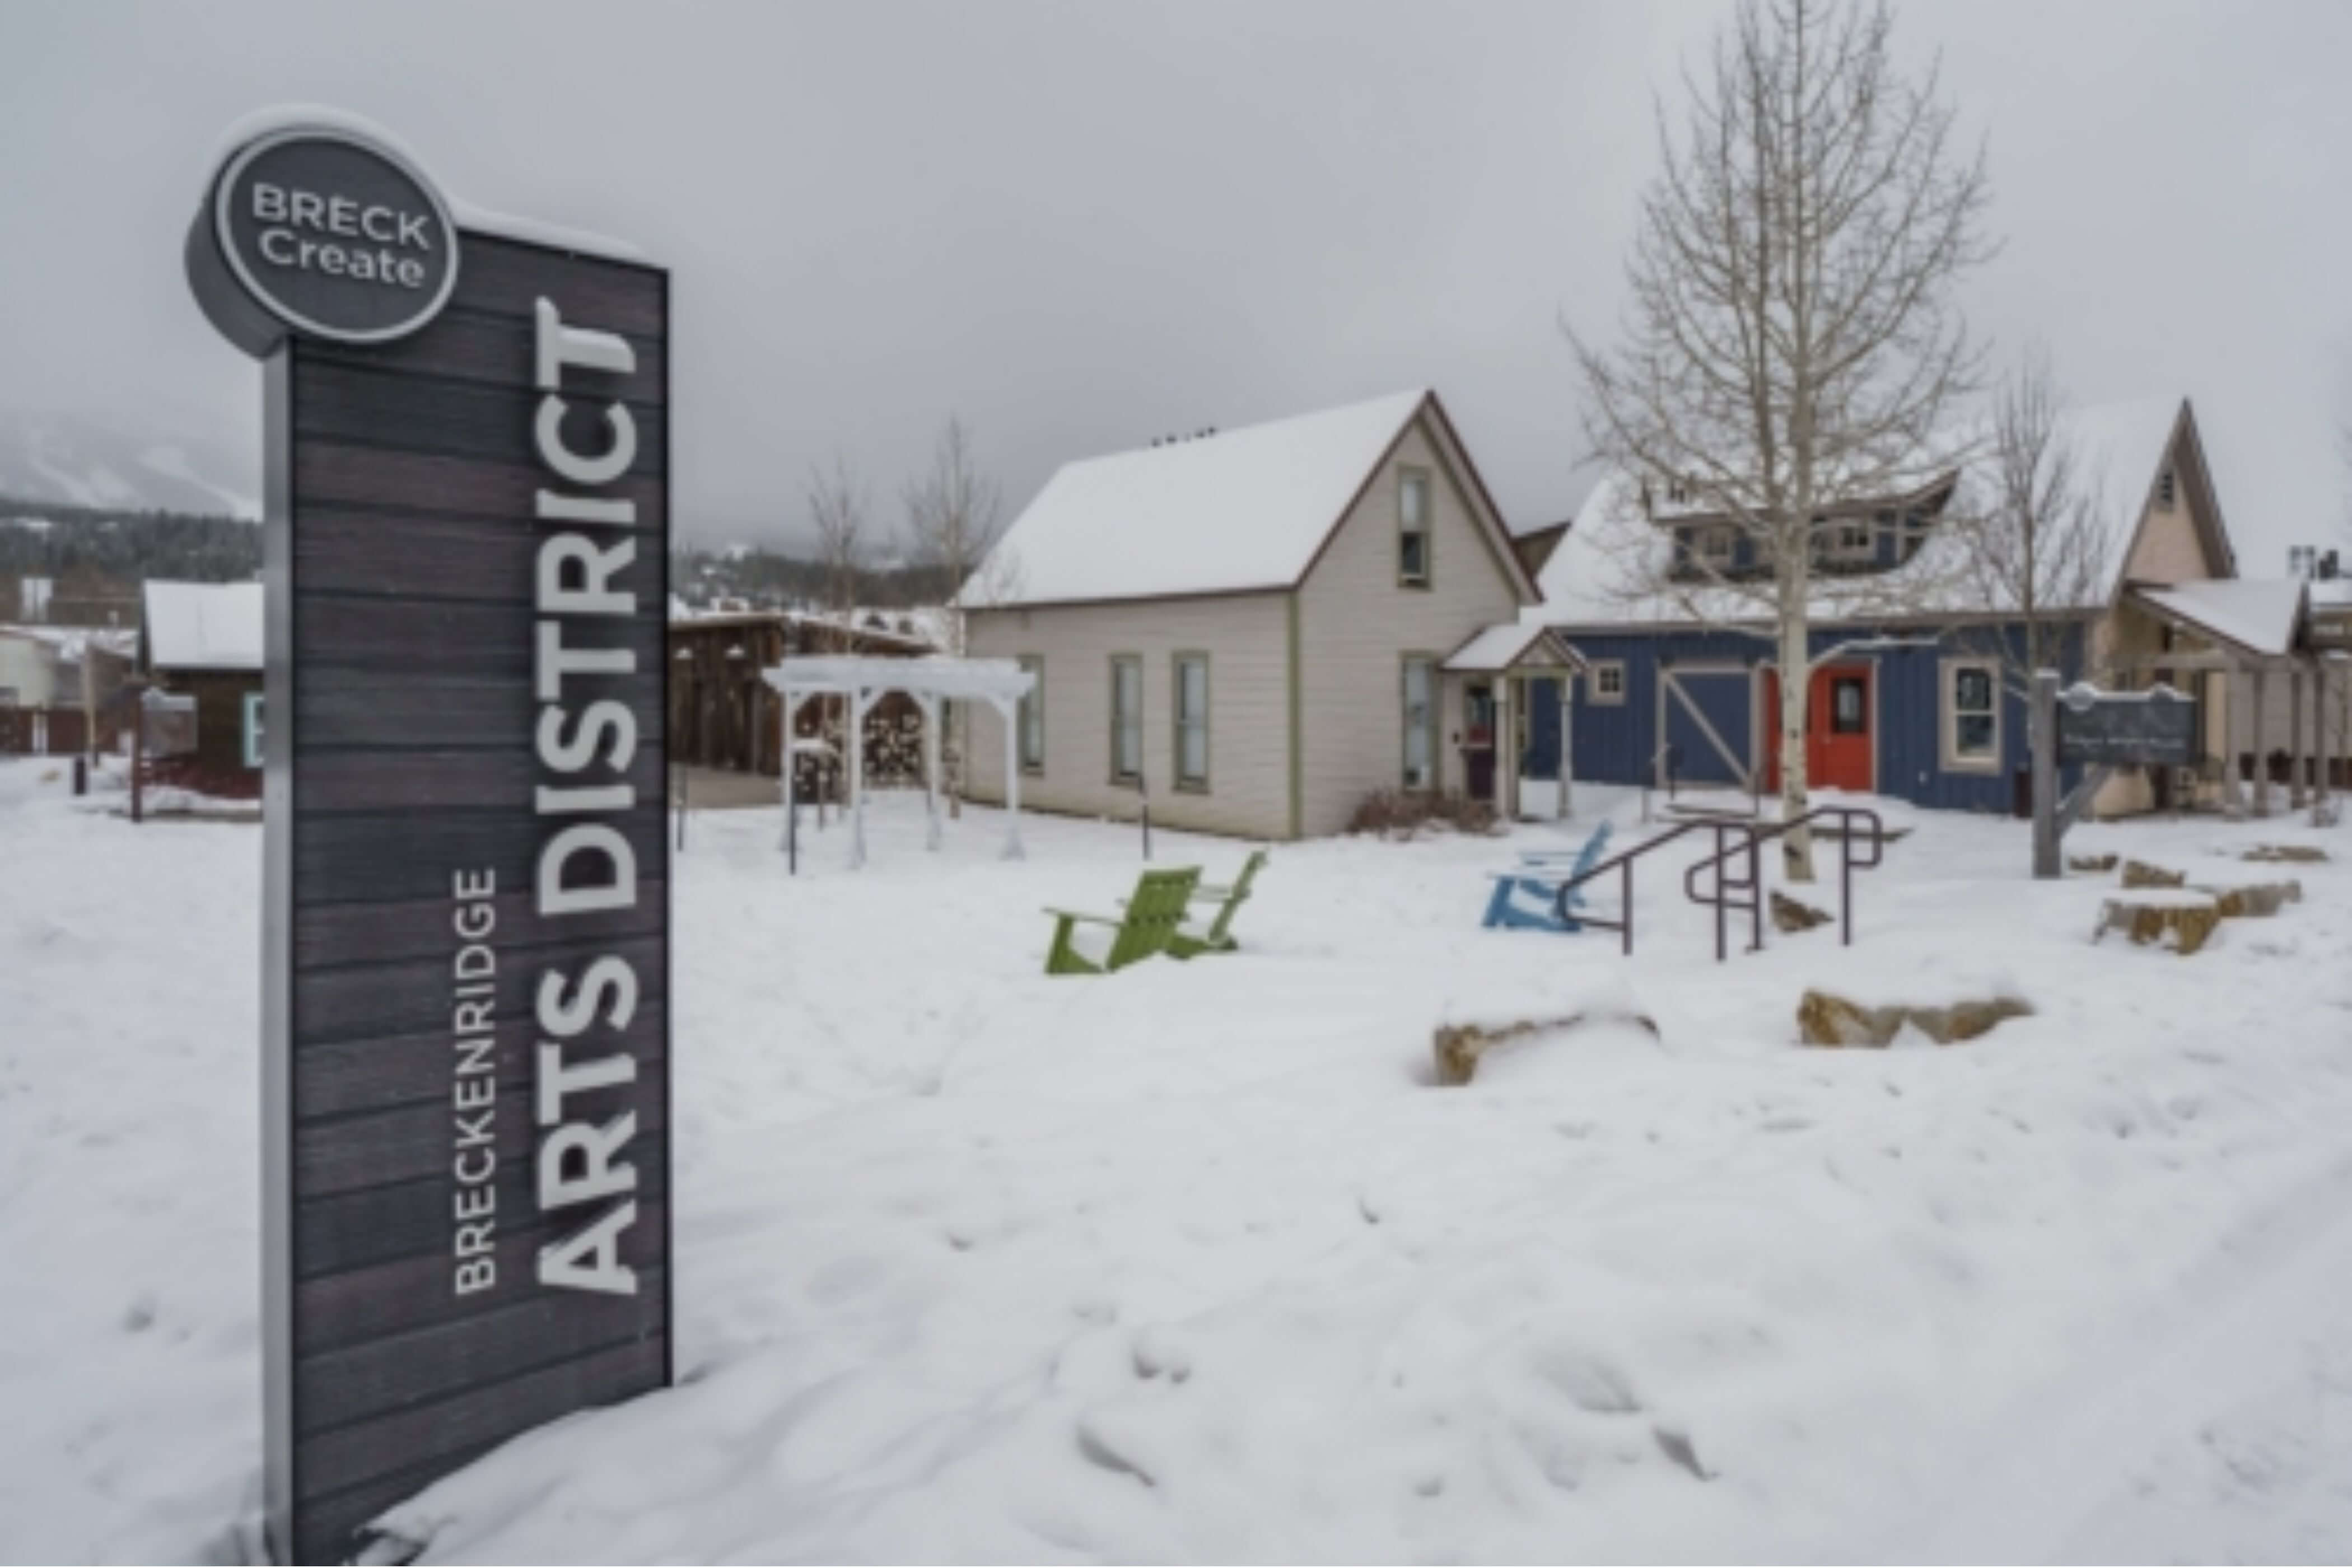 Breck Create Creative Arts District sign